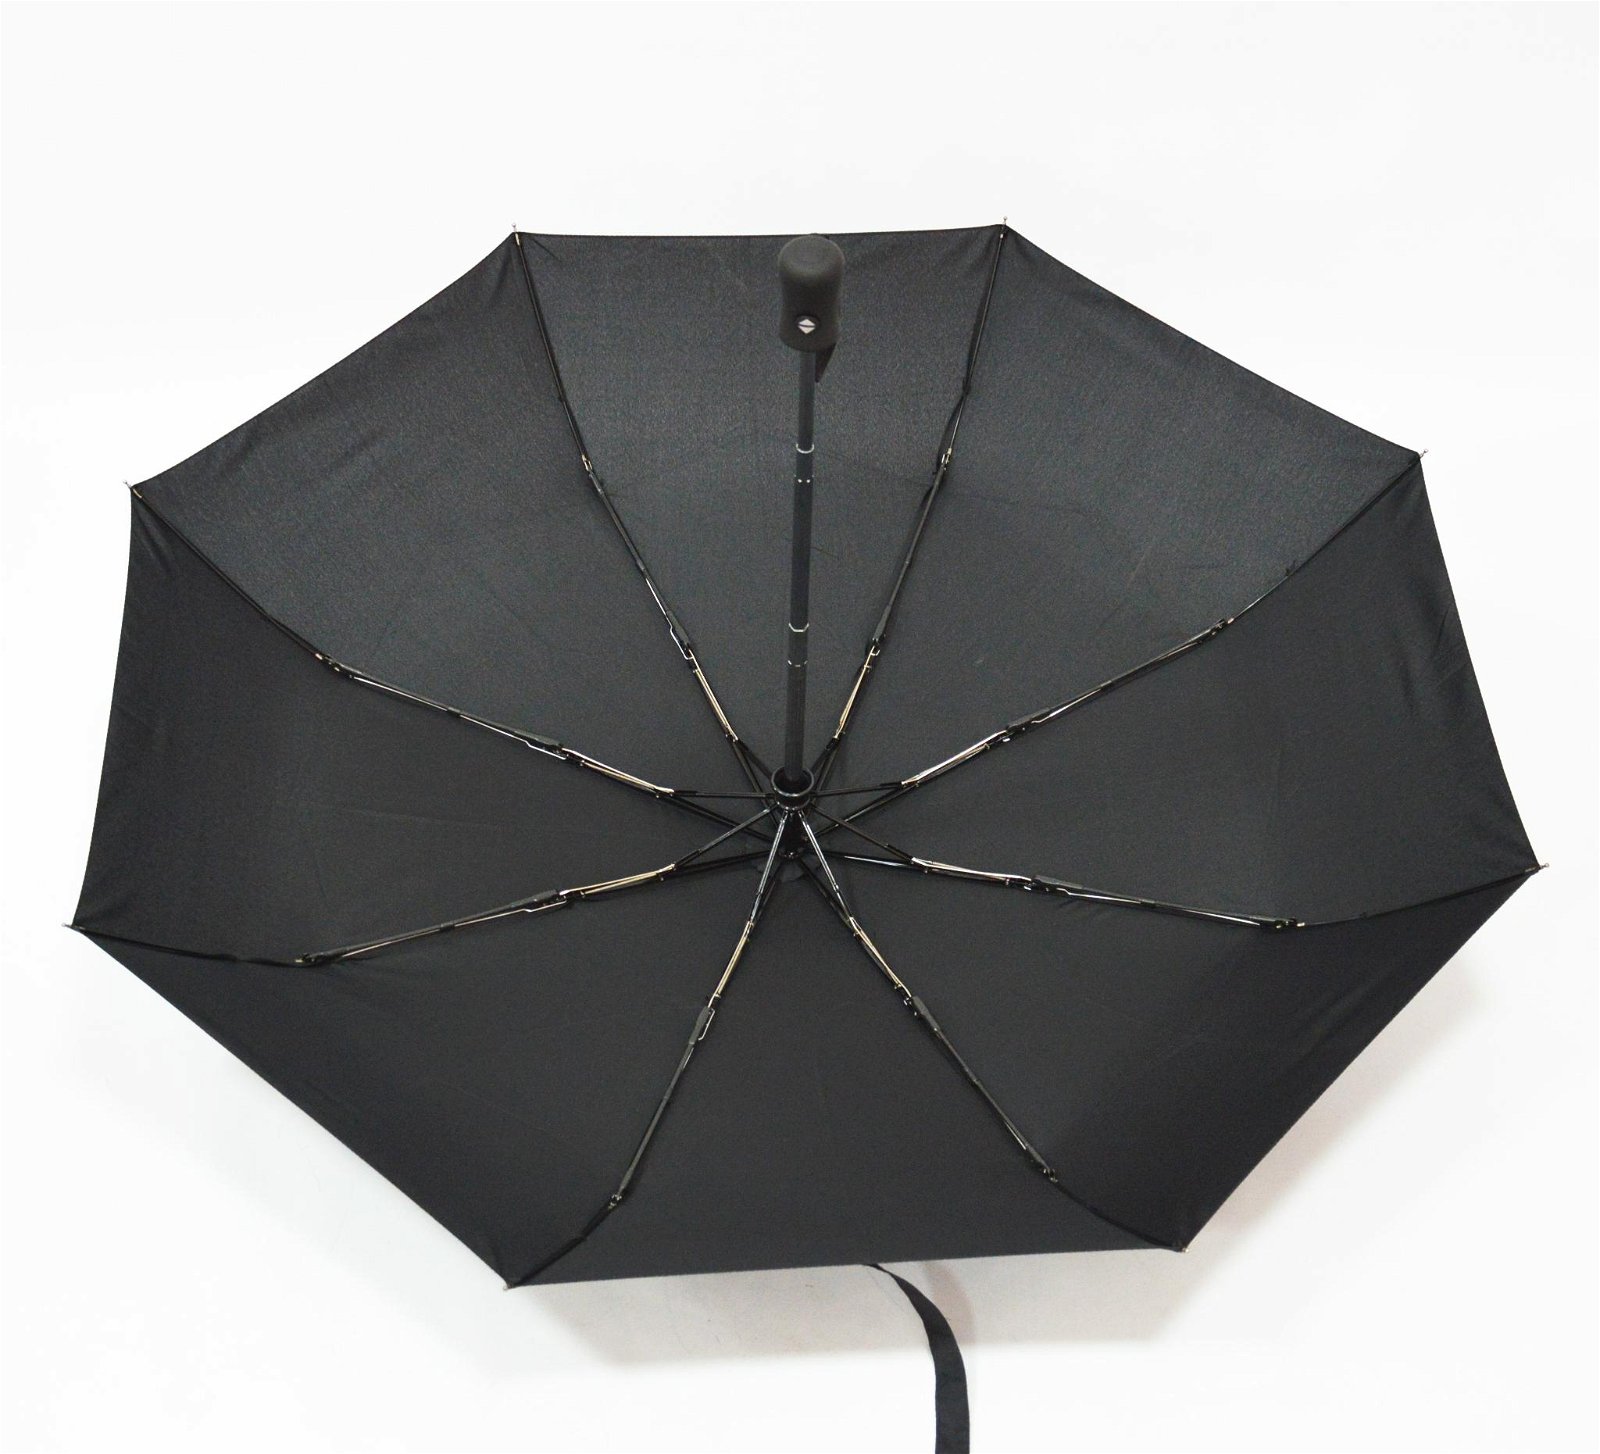 Strong Windproof Folding Umbrella for Travel Umbrella Compact Automatic 3